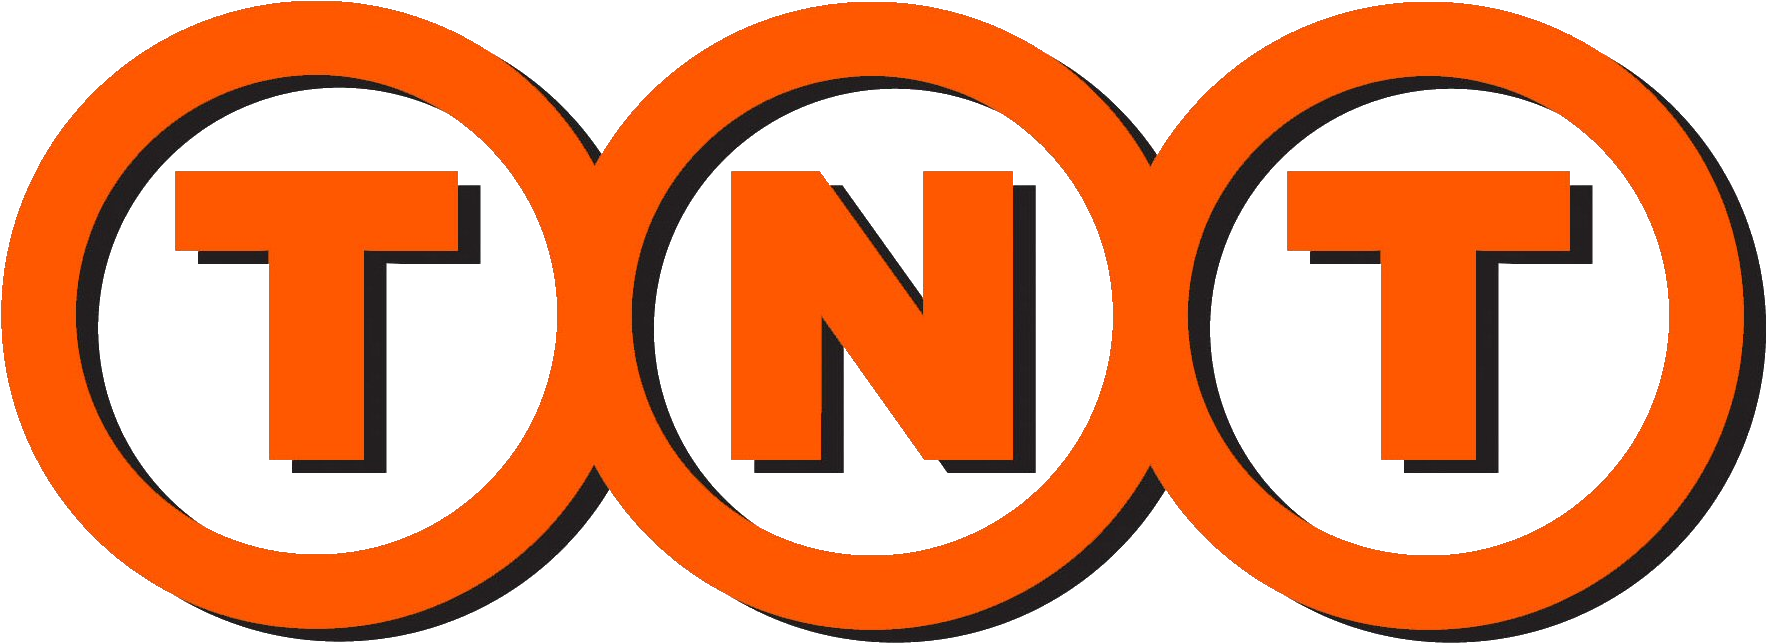 Tnt - Tnt Express Logo Png (1868x686)